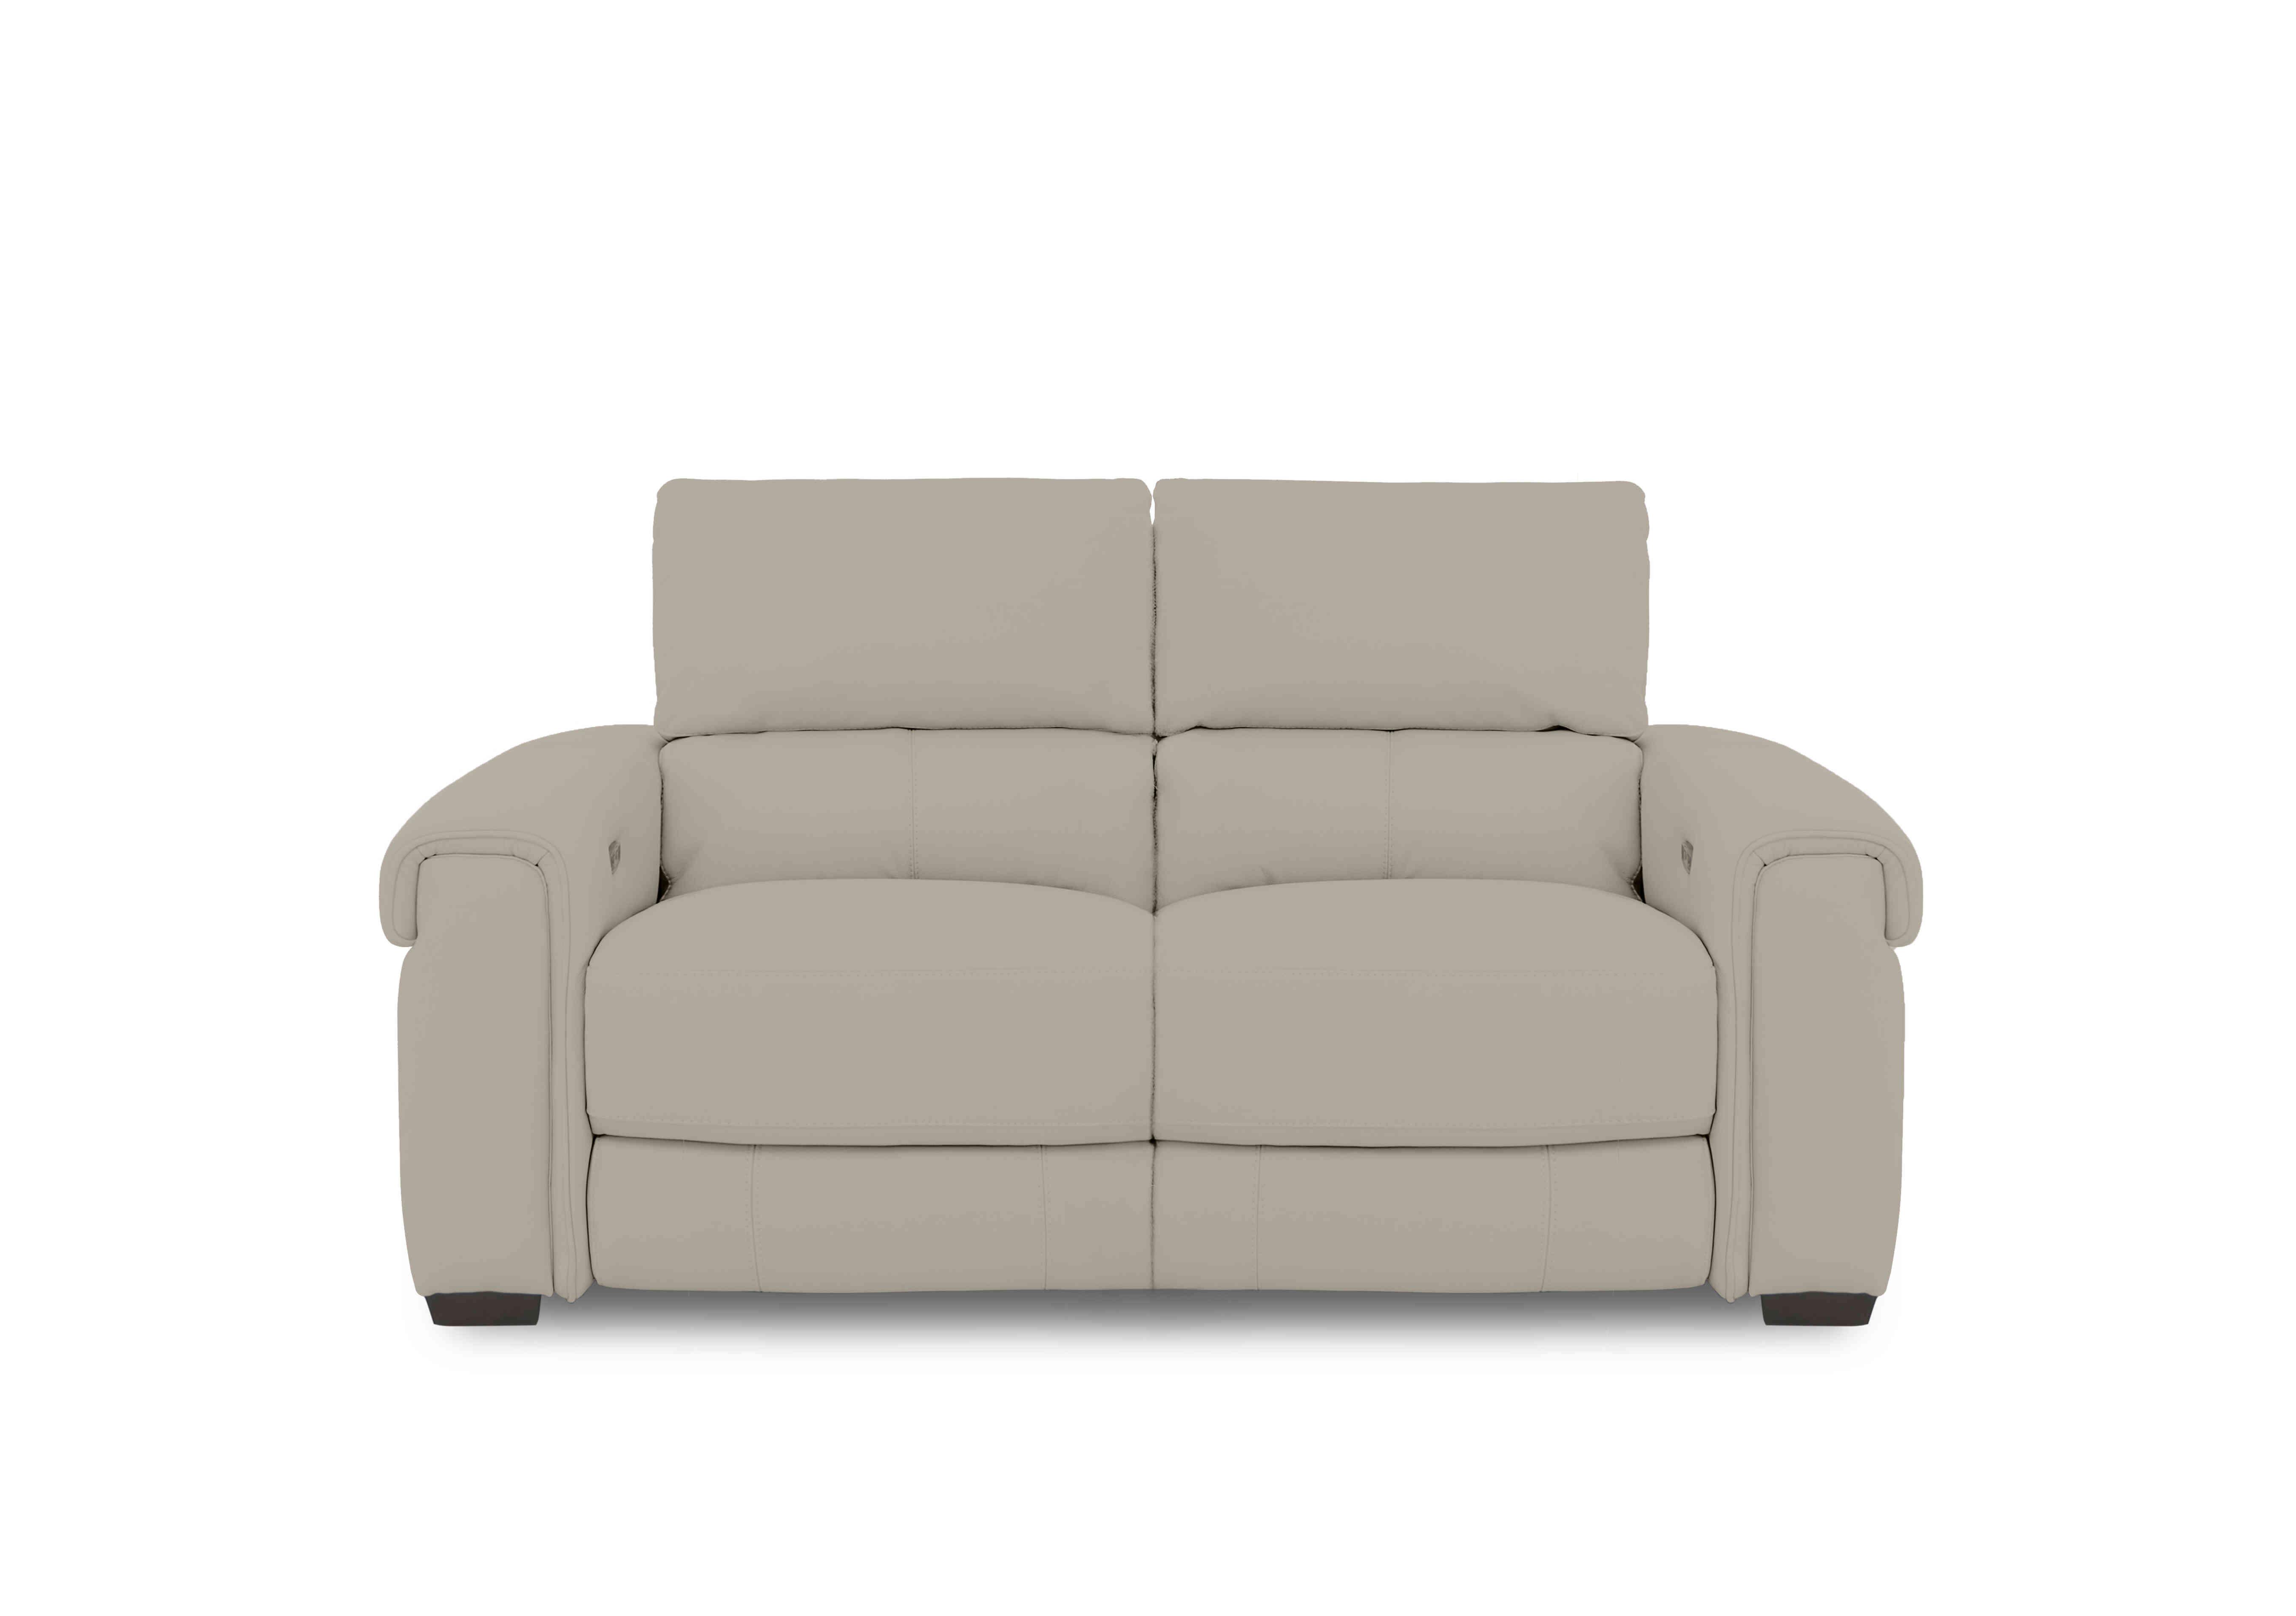 Nixon Fabric 2 Seater Sofa in Fab-Meg-R32 Light Khaki on Furniture Village